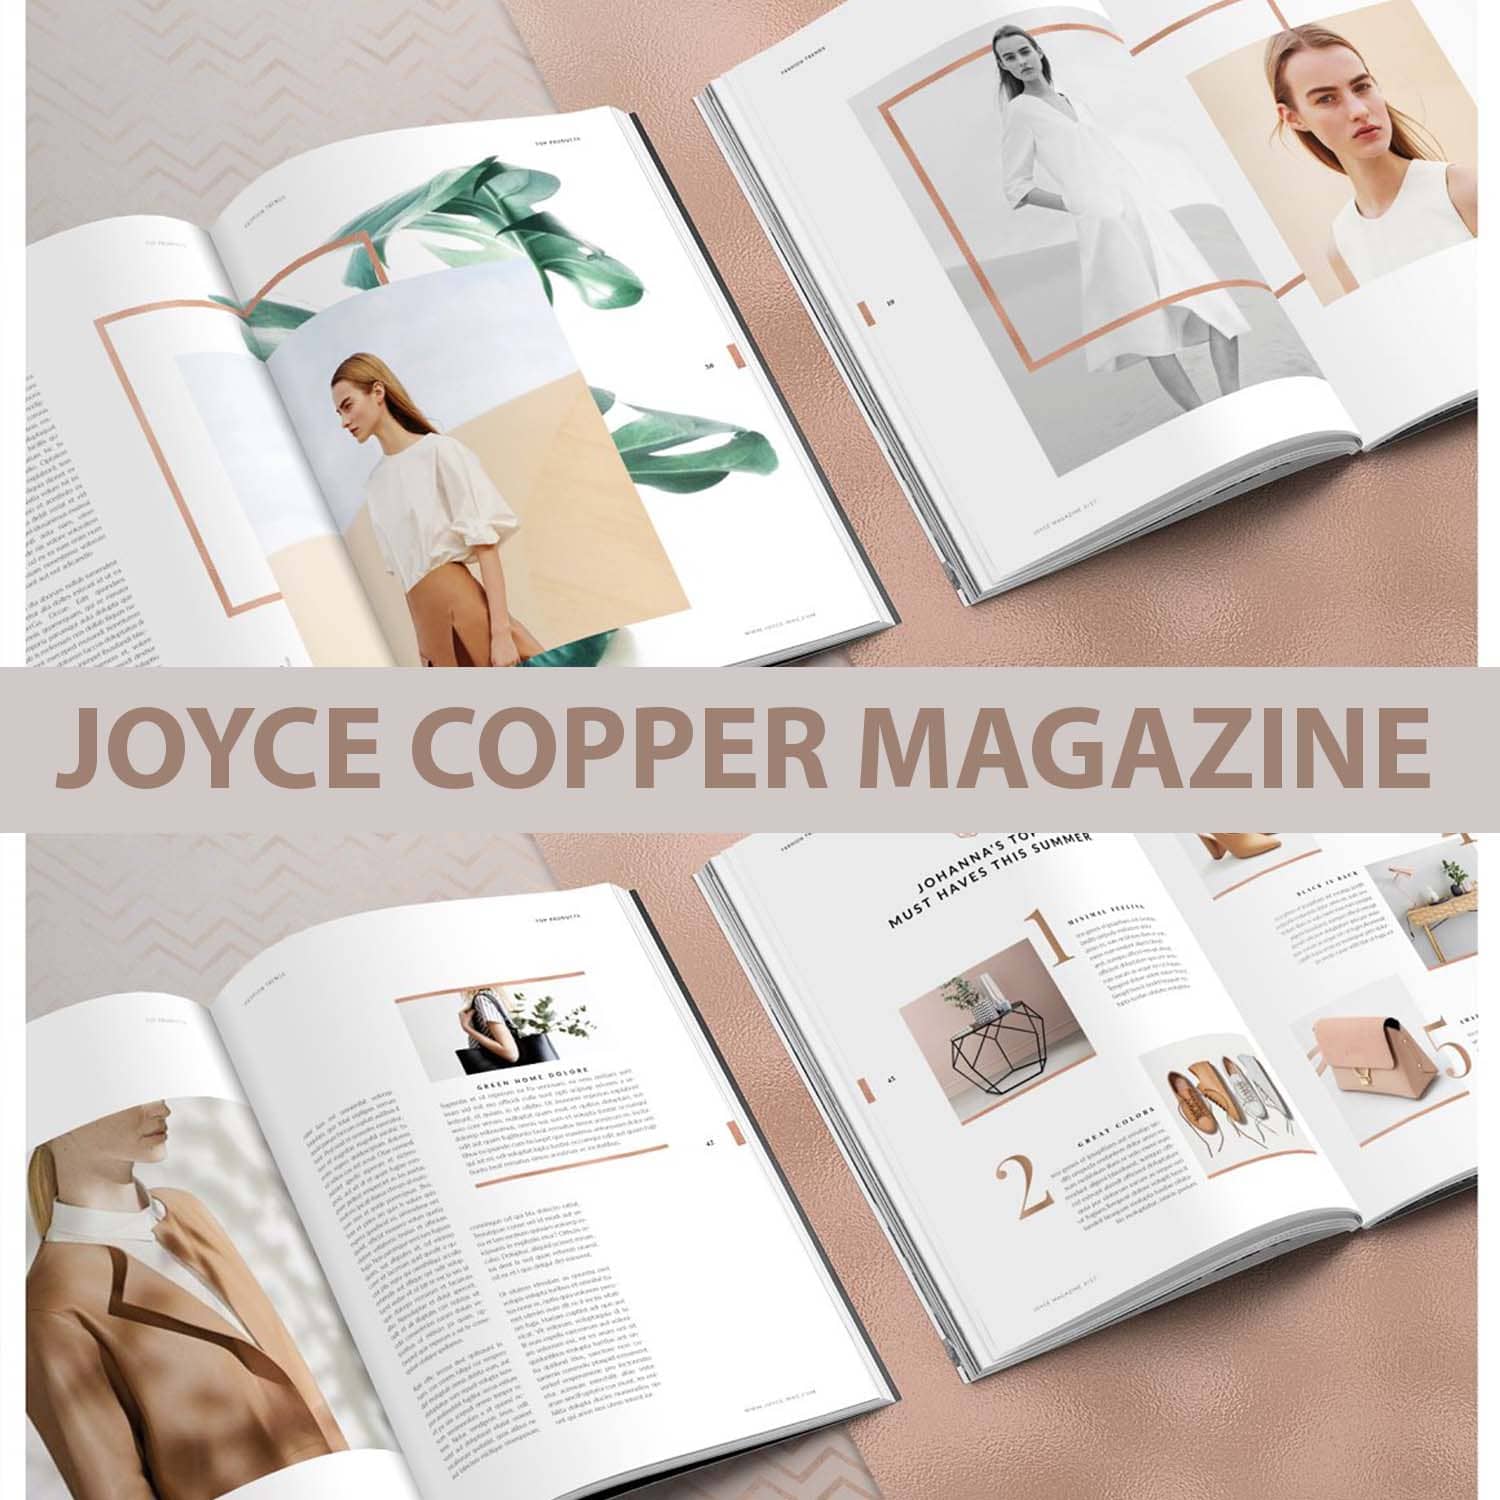 joyce copper magazine cover image.